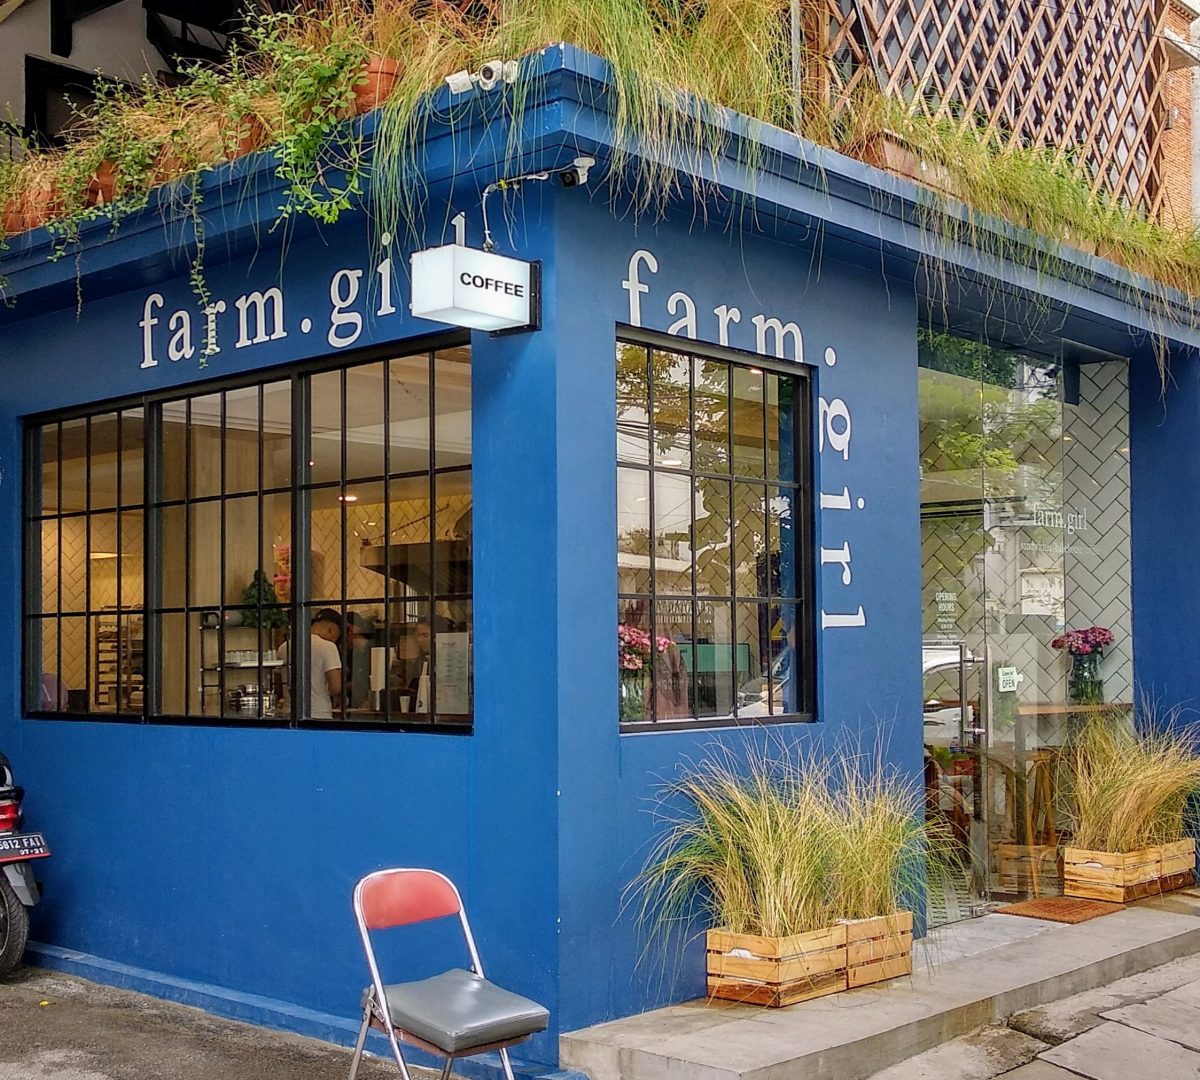 Farmgirl Cafe, Cafe dengan Desain Biru Bergaya American Dinner